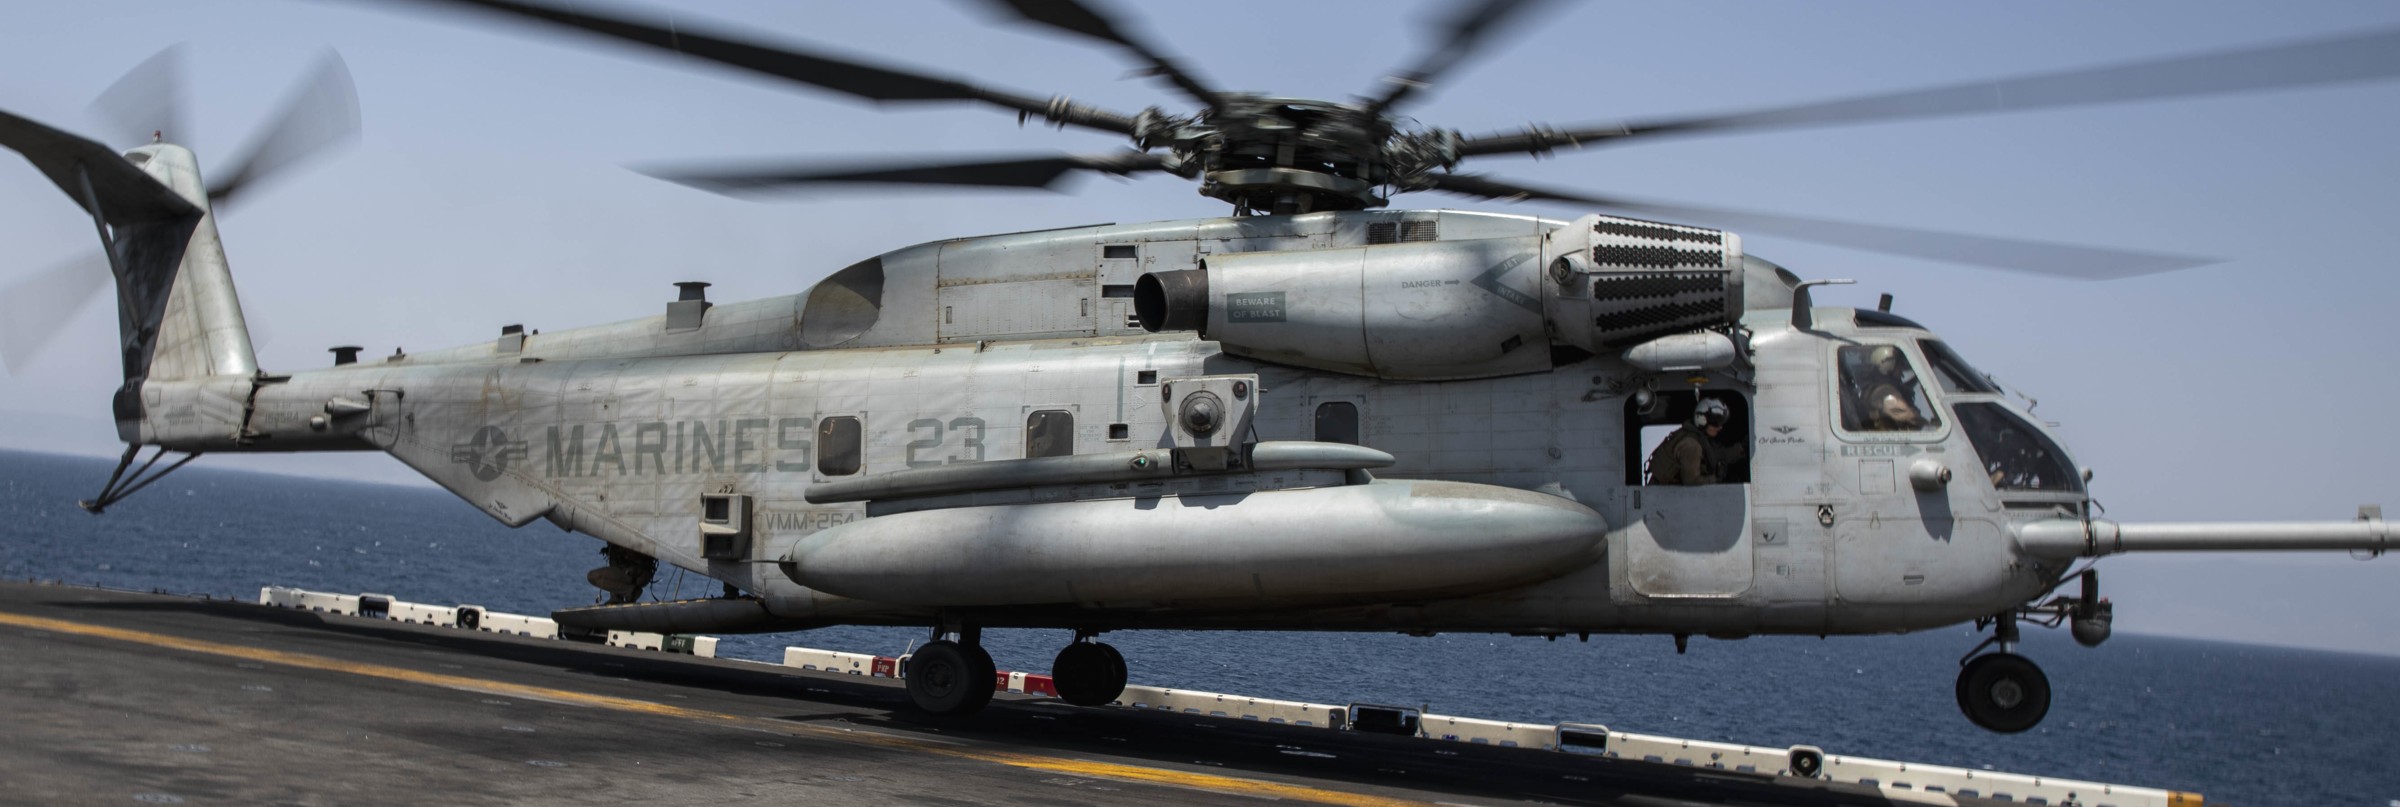 hmh-366 hammerheads ch-53e super stallion marine heavy helicopter squadron usmc 147